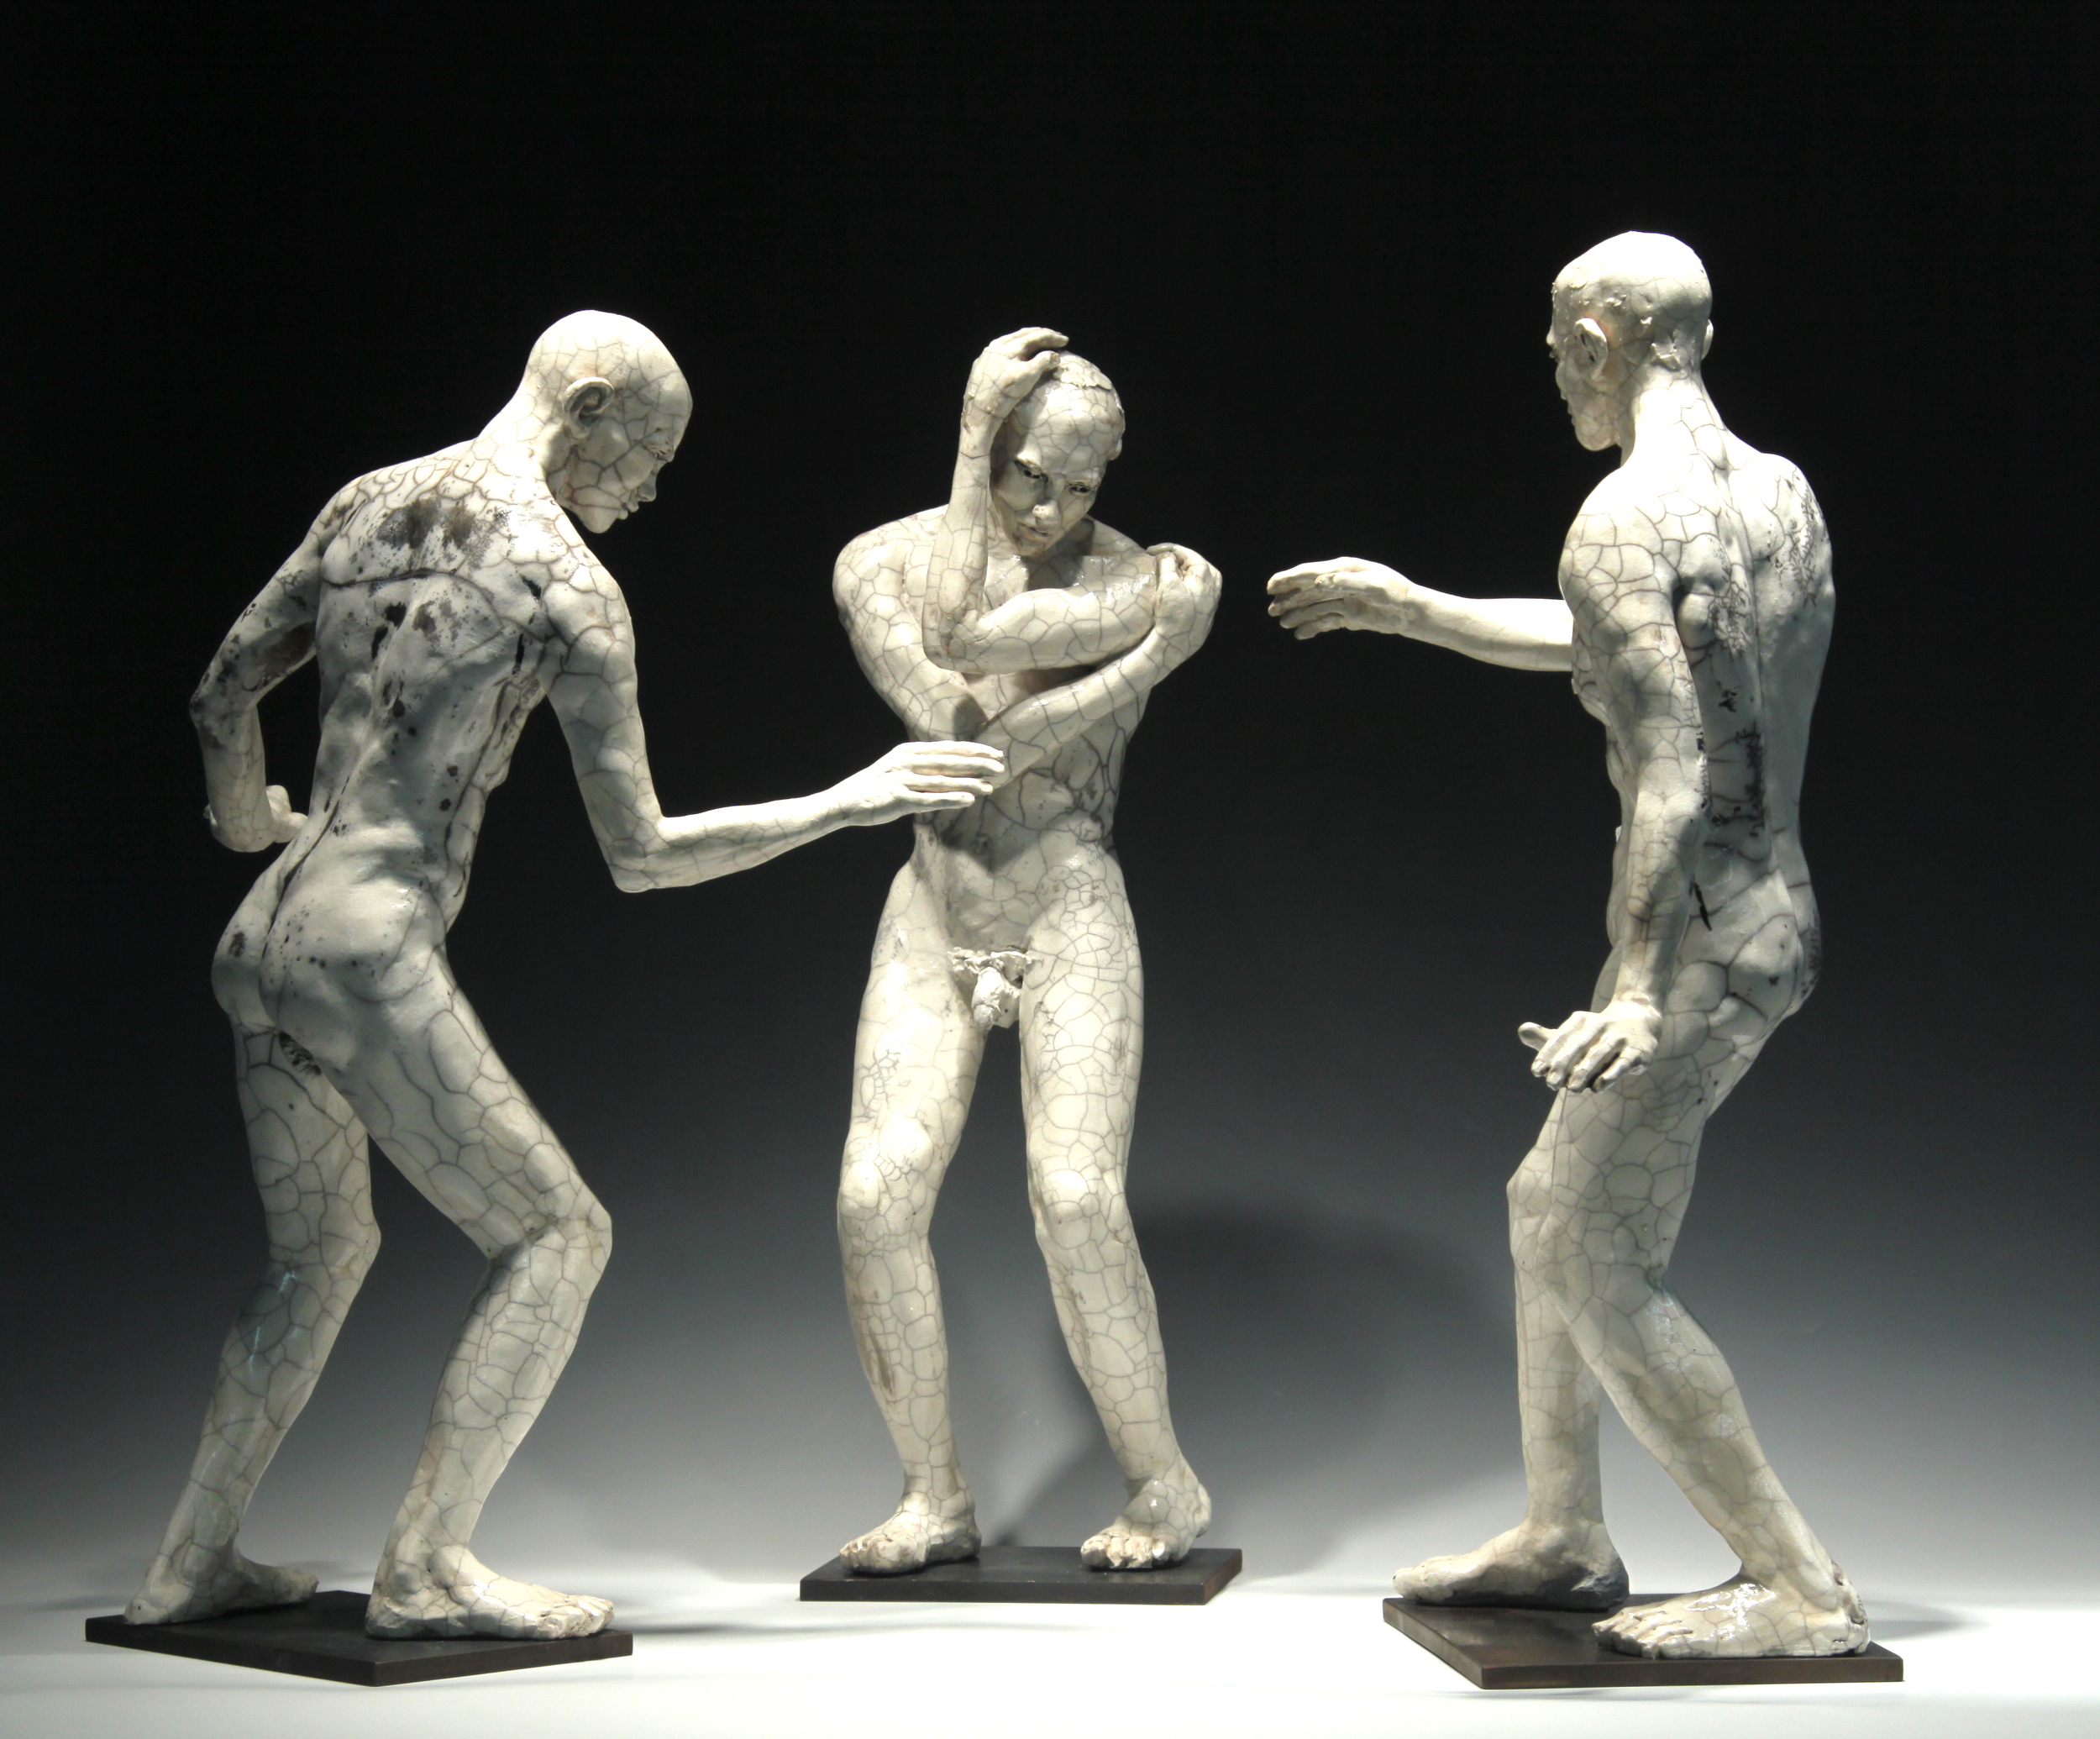   Three Male Figures  (installation view) 23"H, raku-fired stoneware 